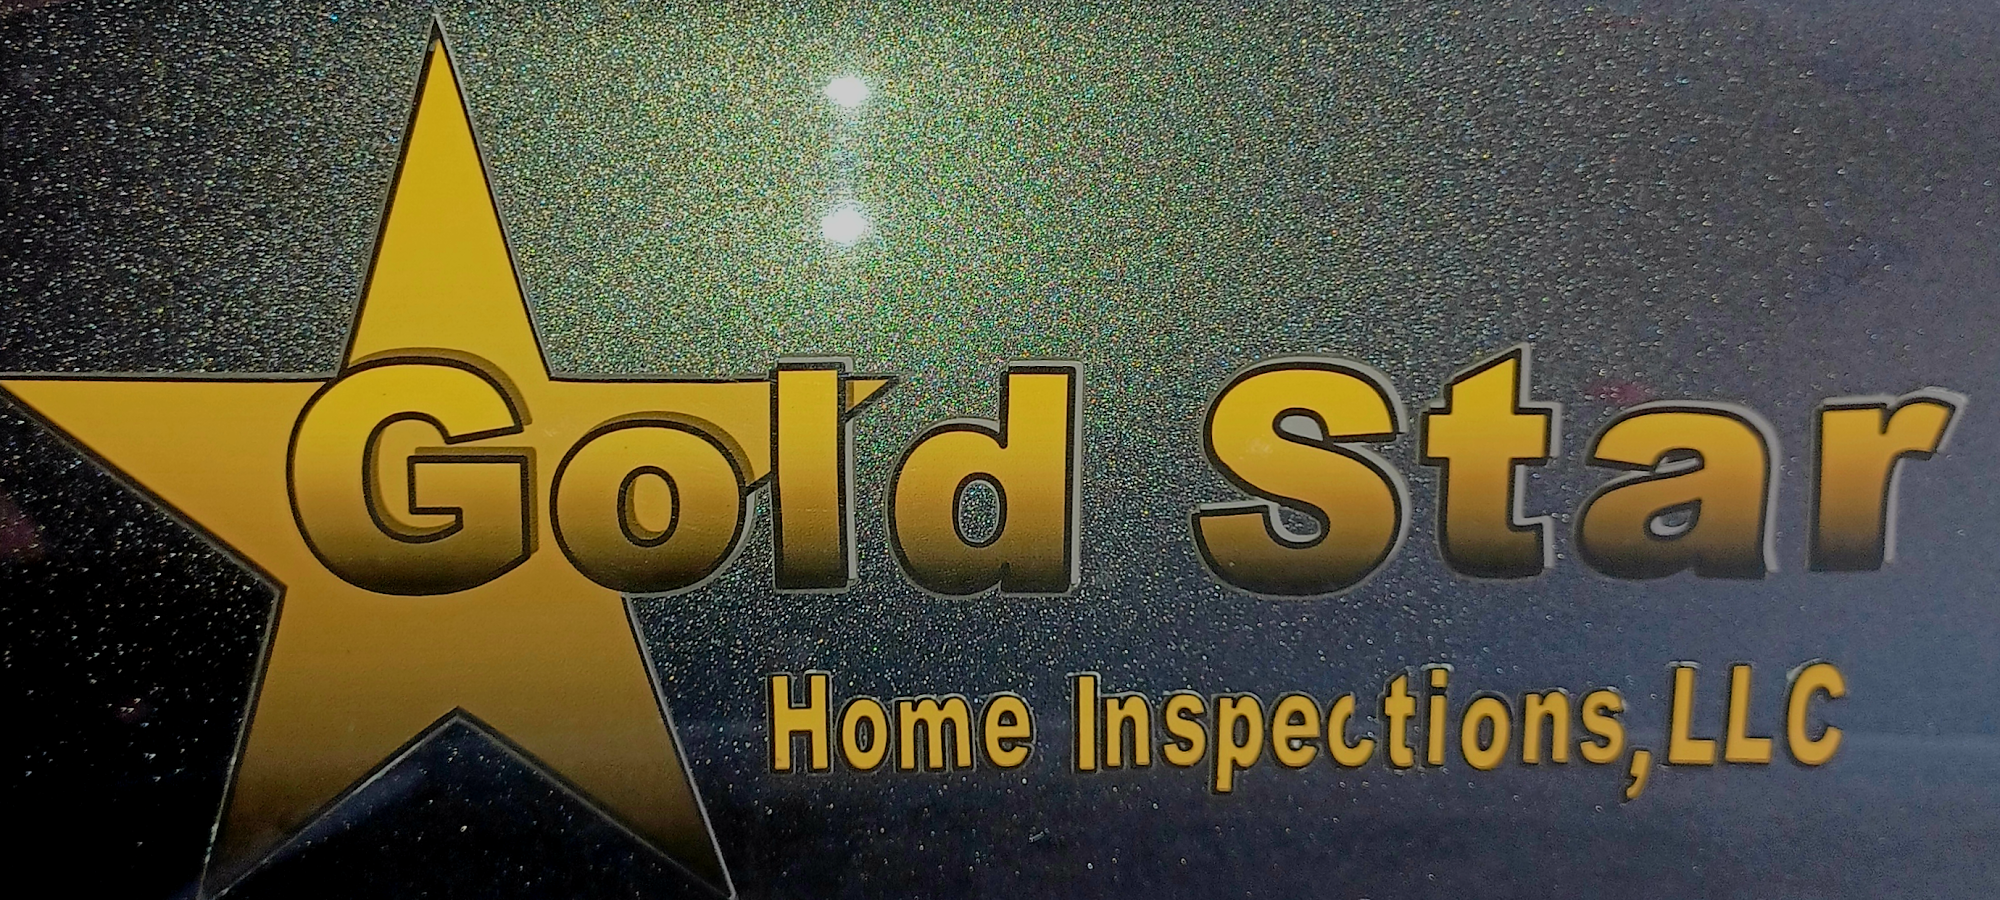 Gold Star Home Inspections, LLC 7996 S 95th St E, Braggs Oklahoma 74423